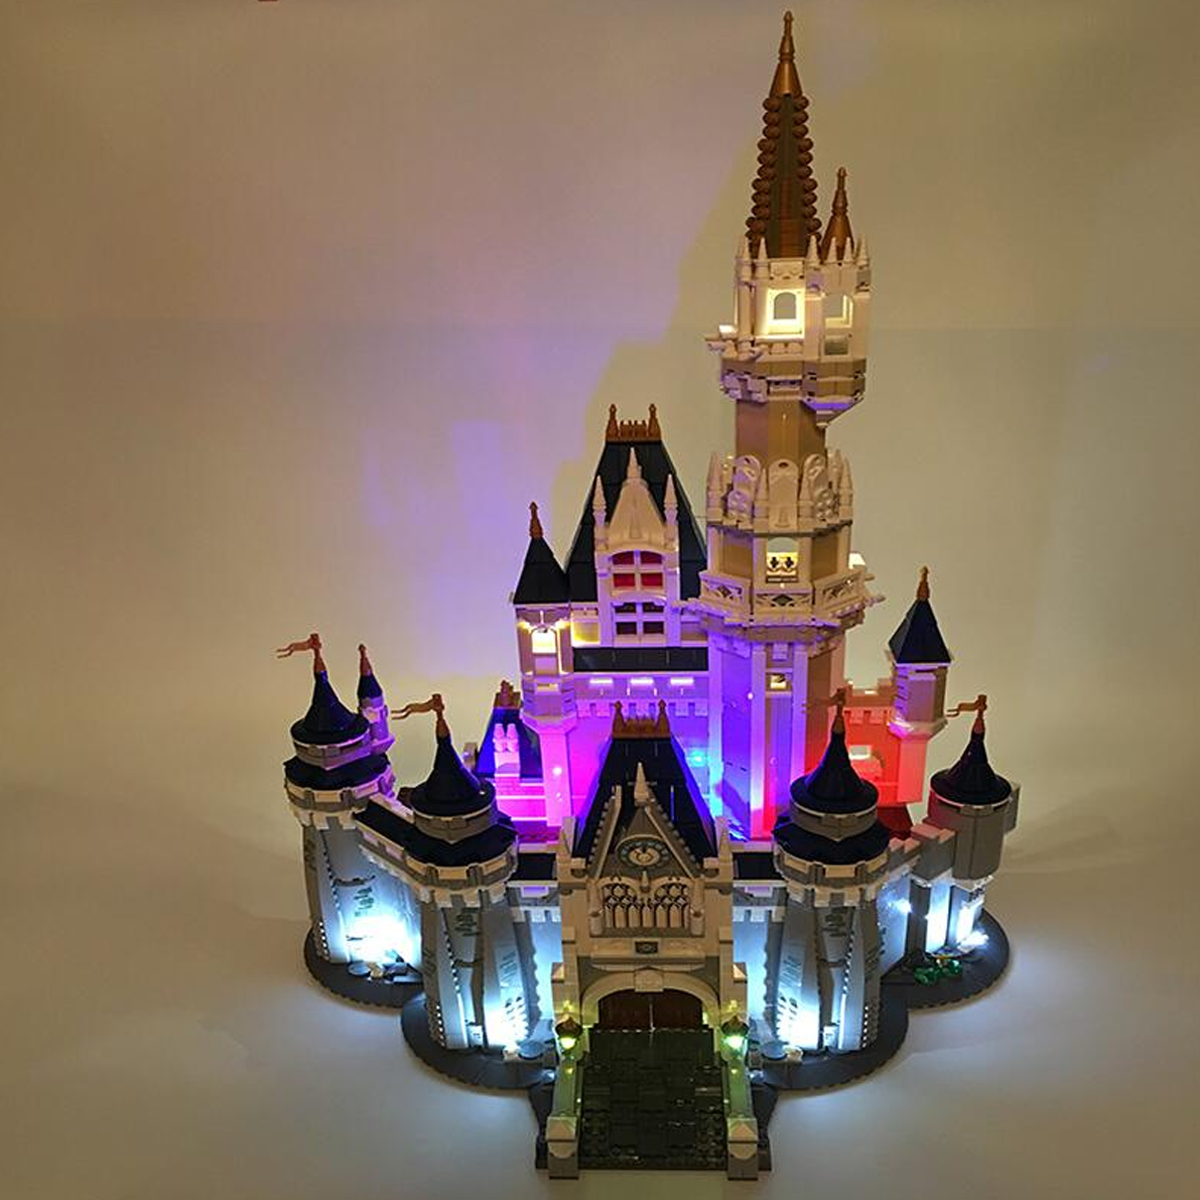 Universal DIY LED Light Brick Kit For Lego MOC Toys USB Port Blocks Accessories Decor